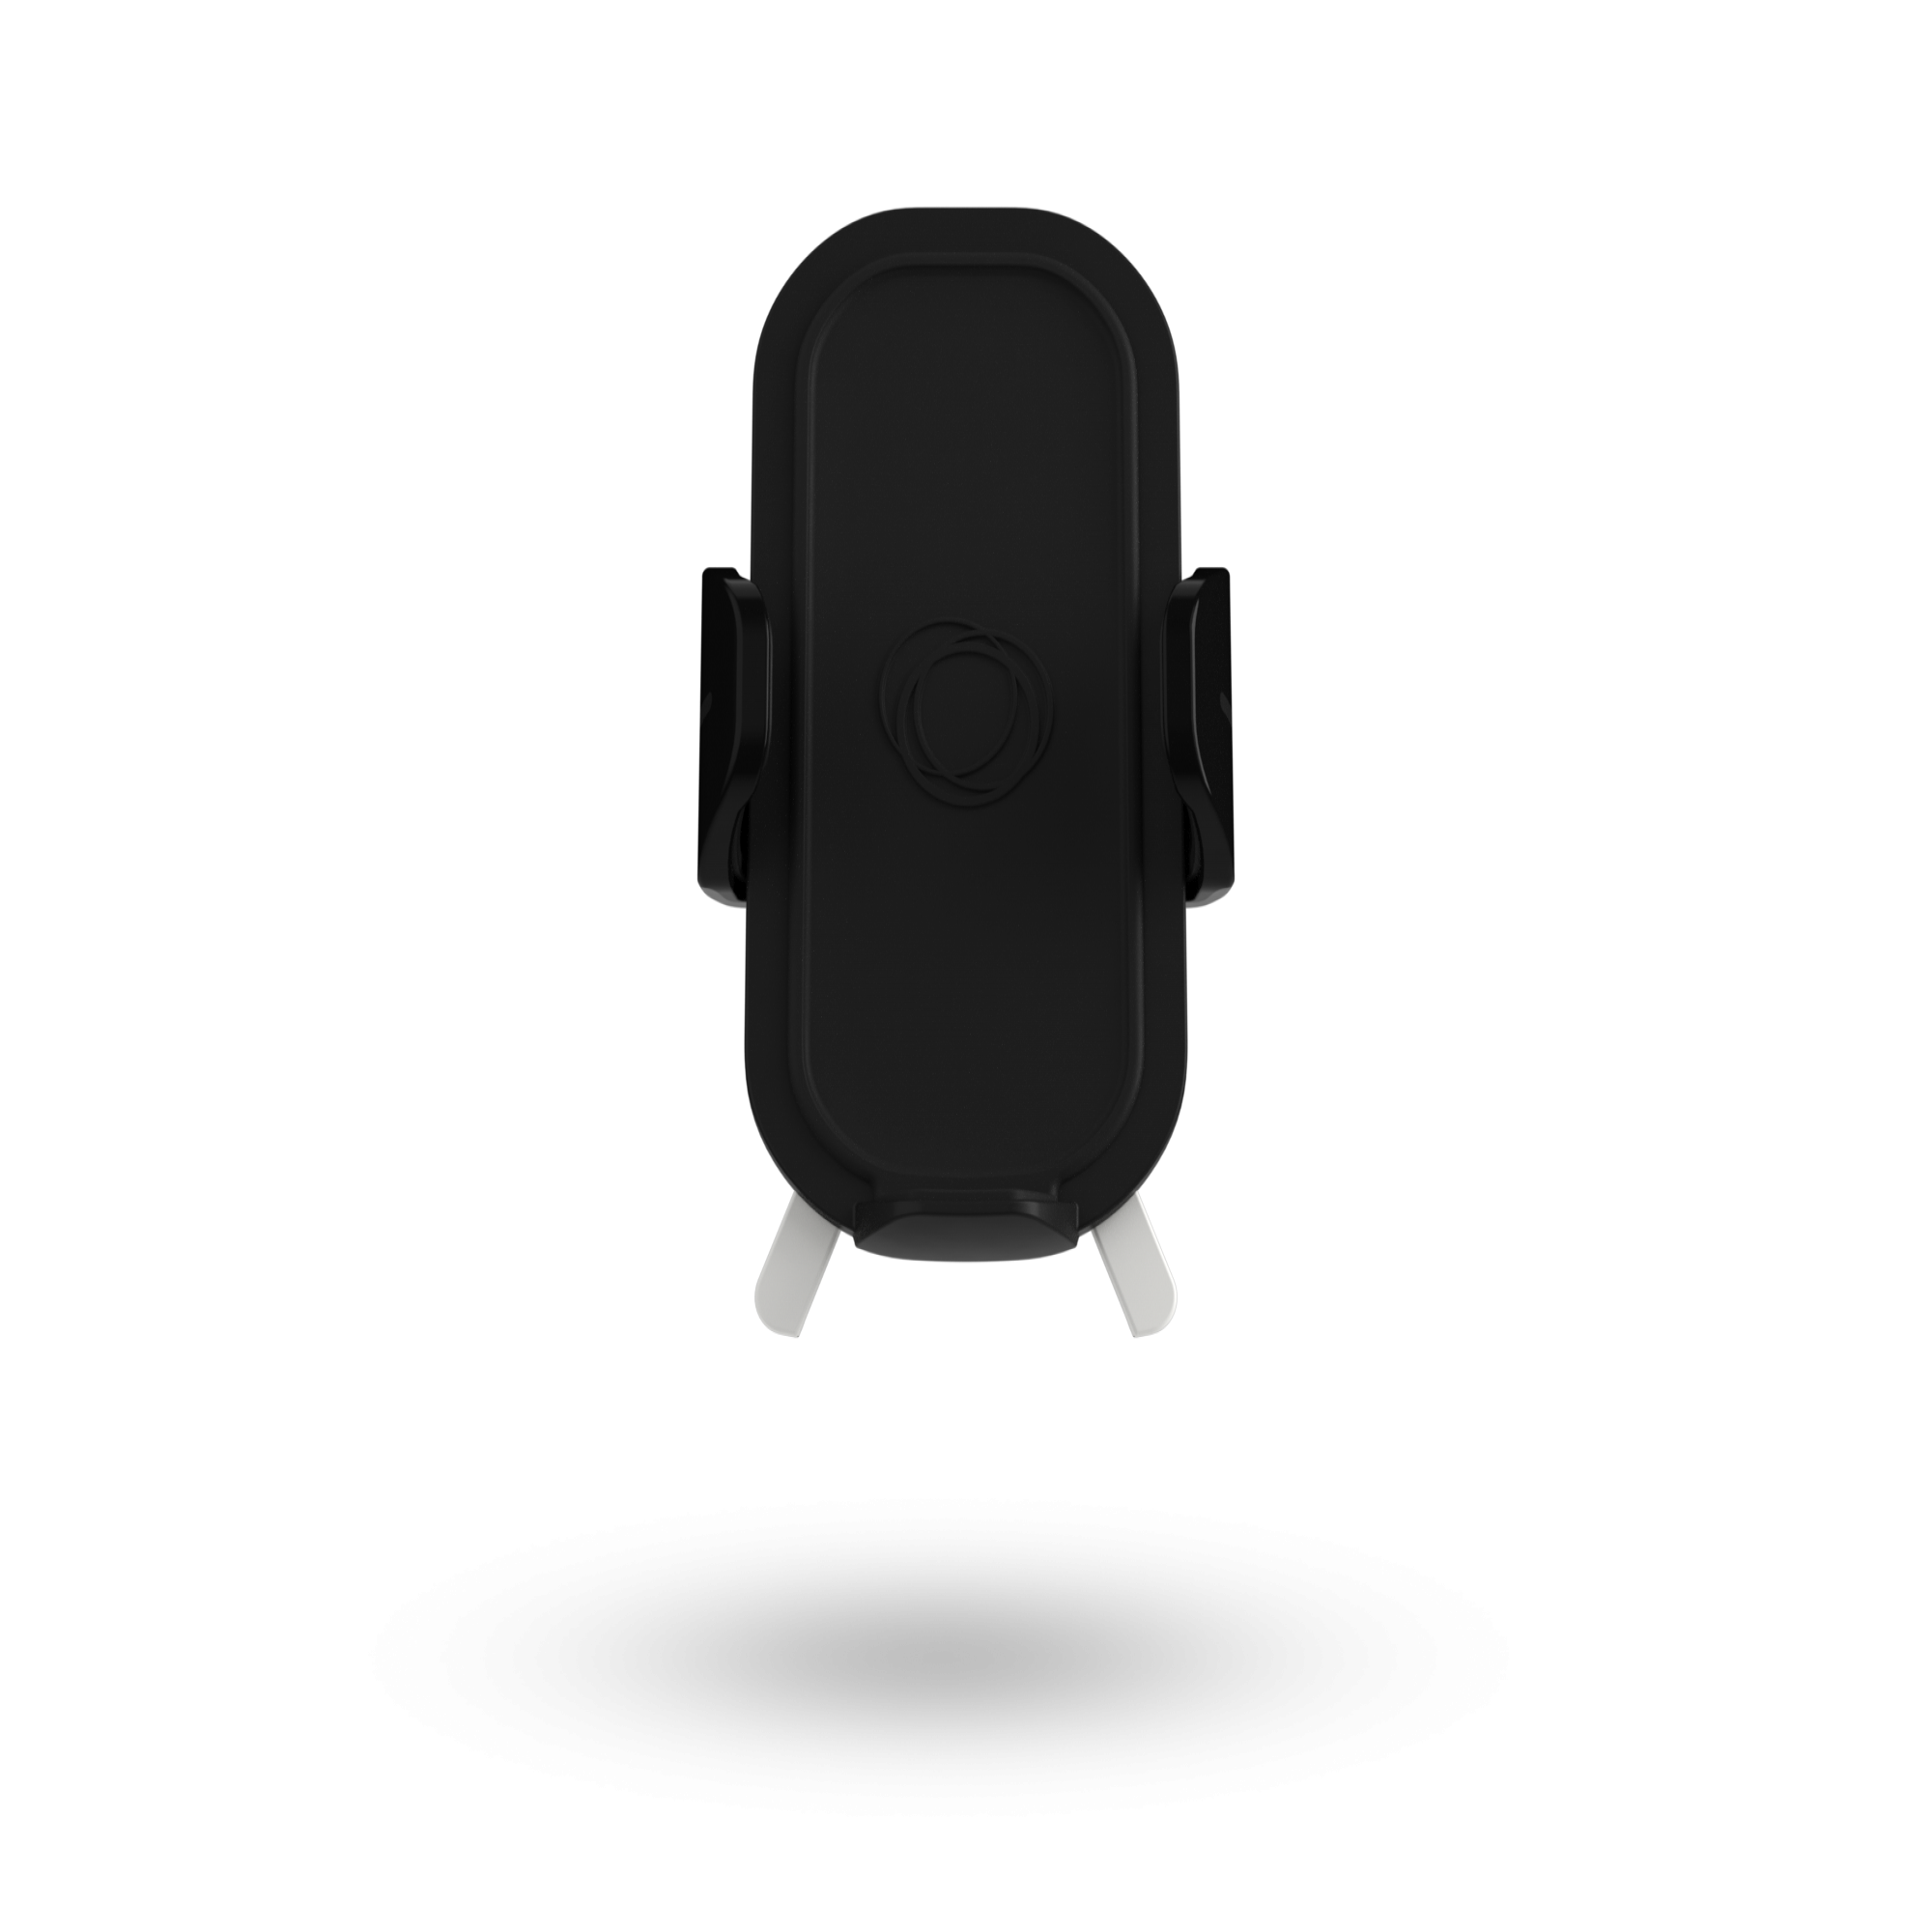 bugaboo cell phone holder